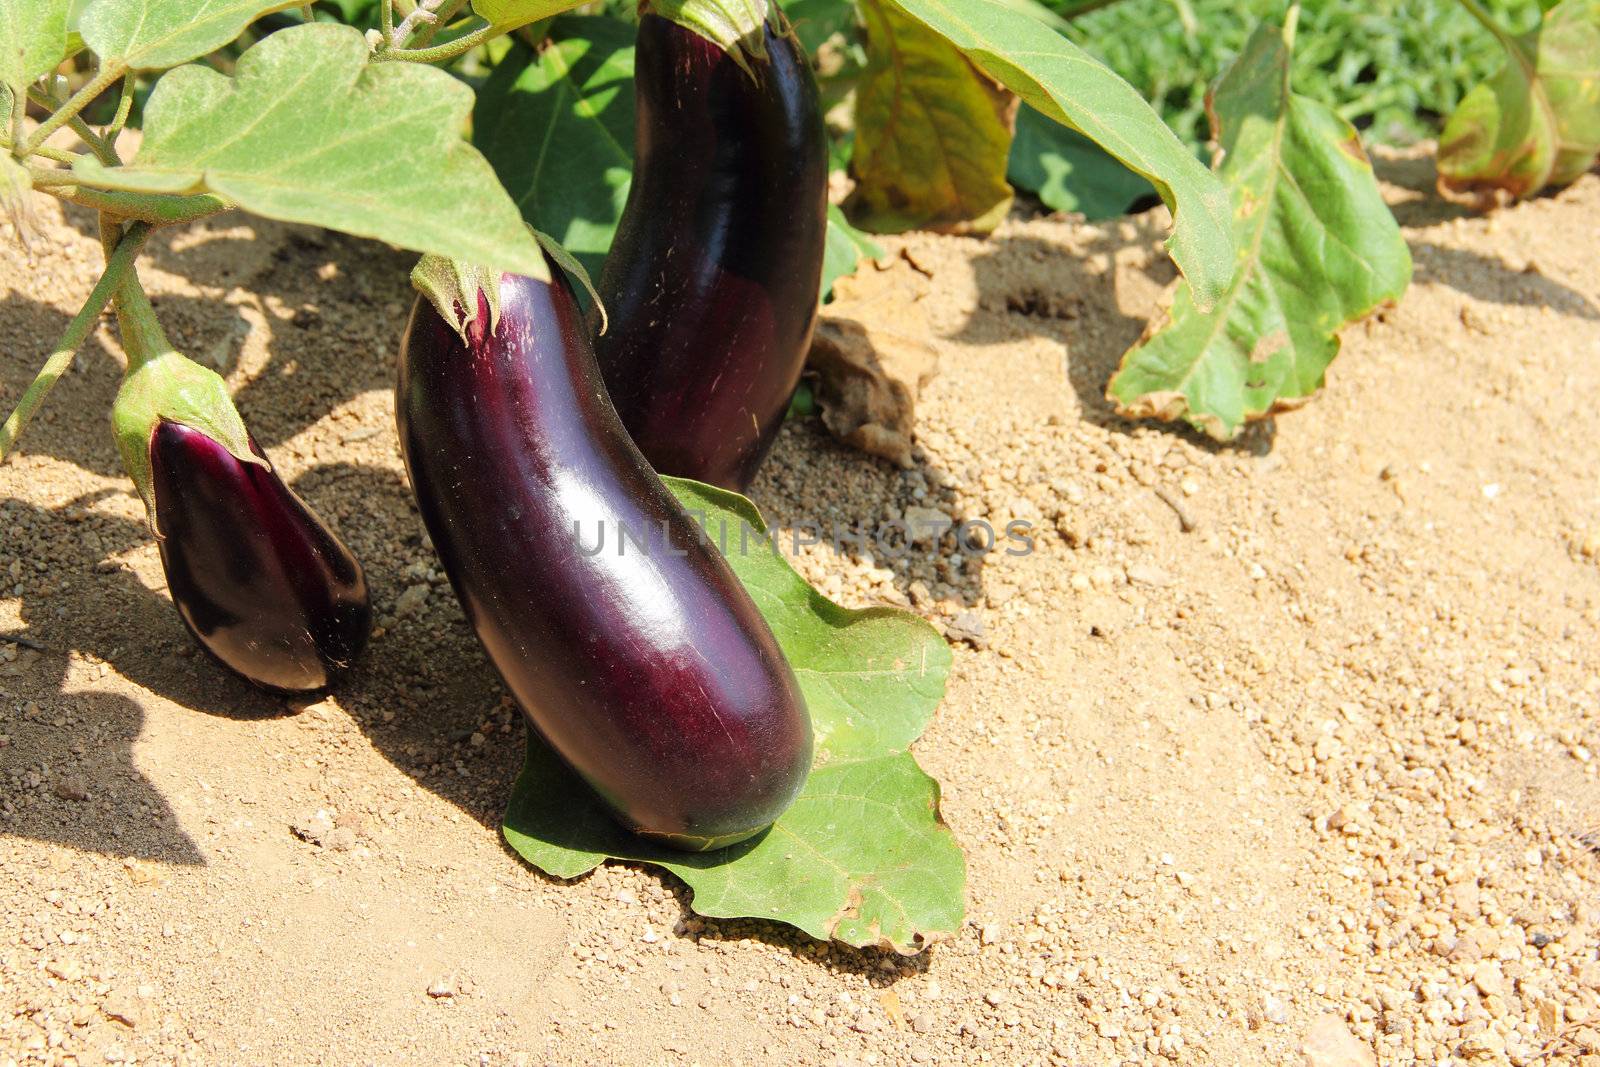 Eggplant fruits growing in the garden by destillat